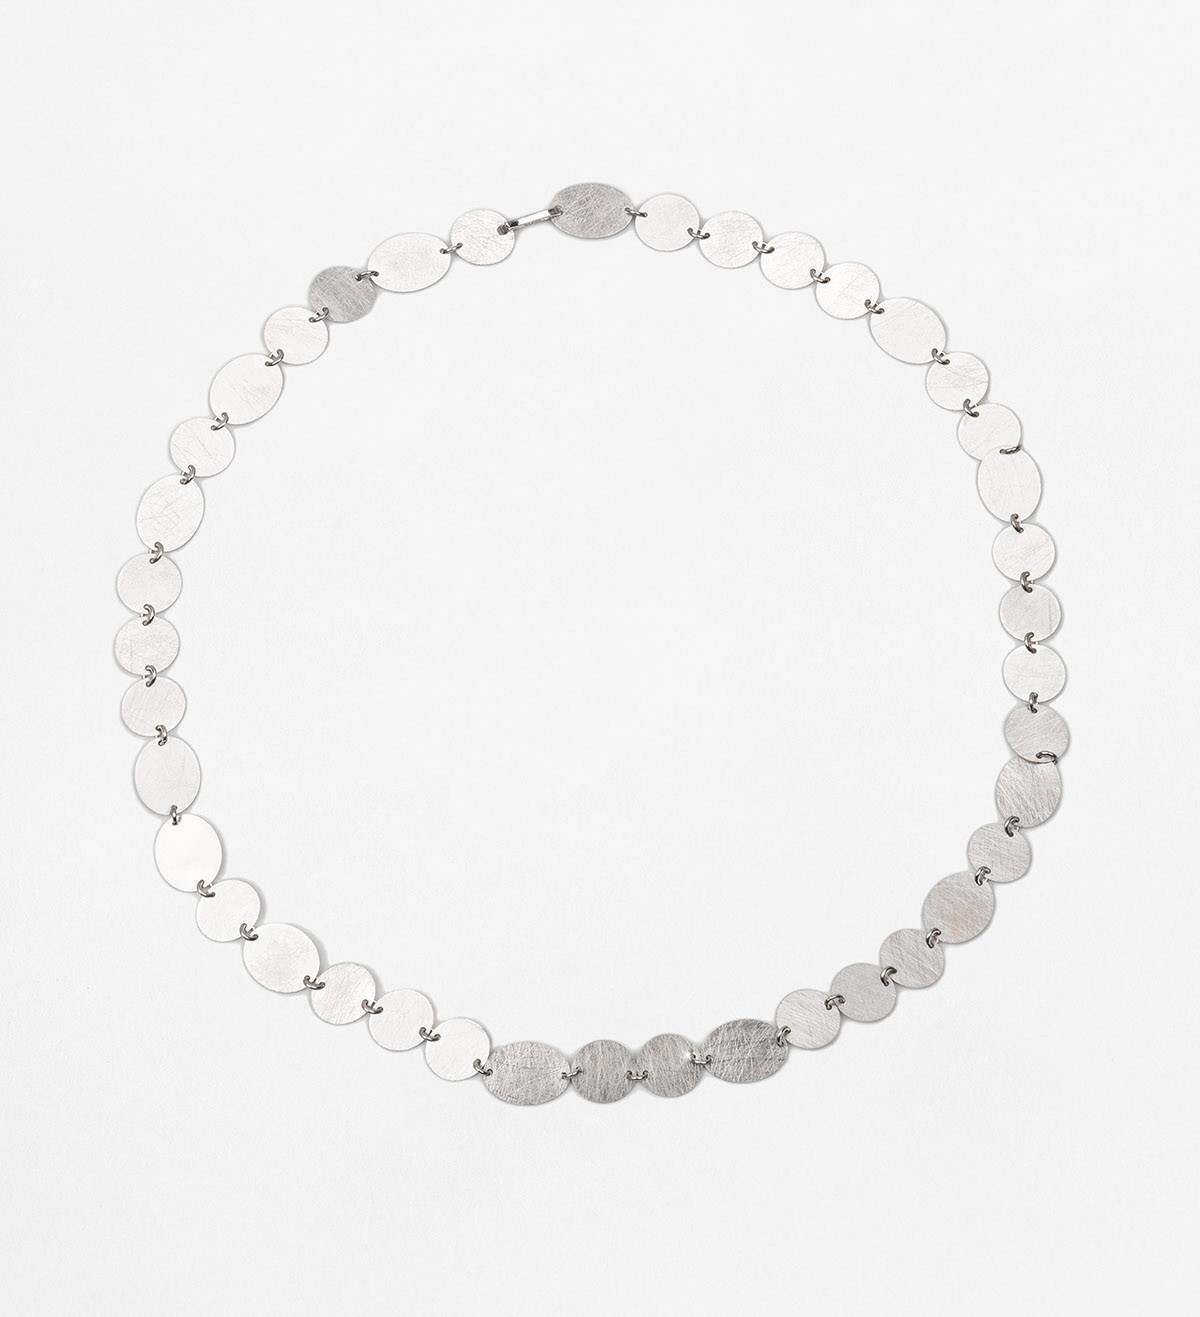 Silver necklace Party 45cm